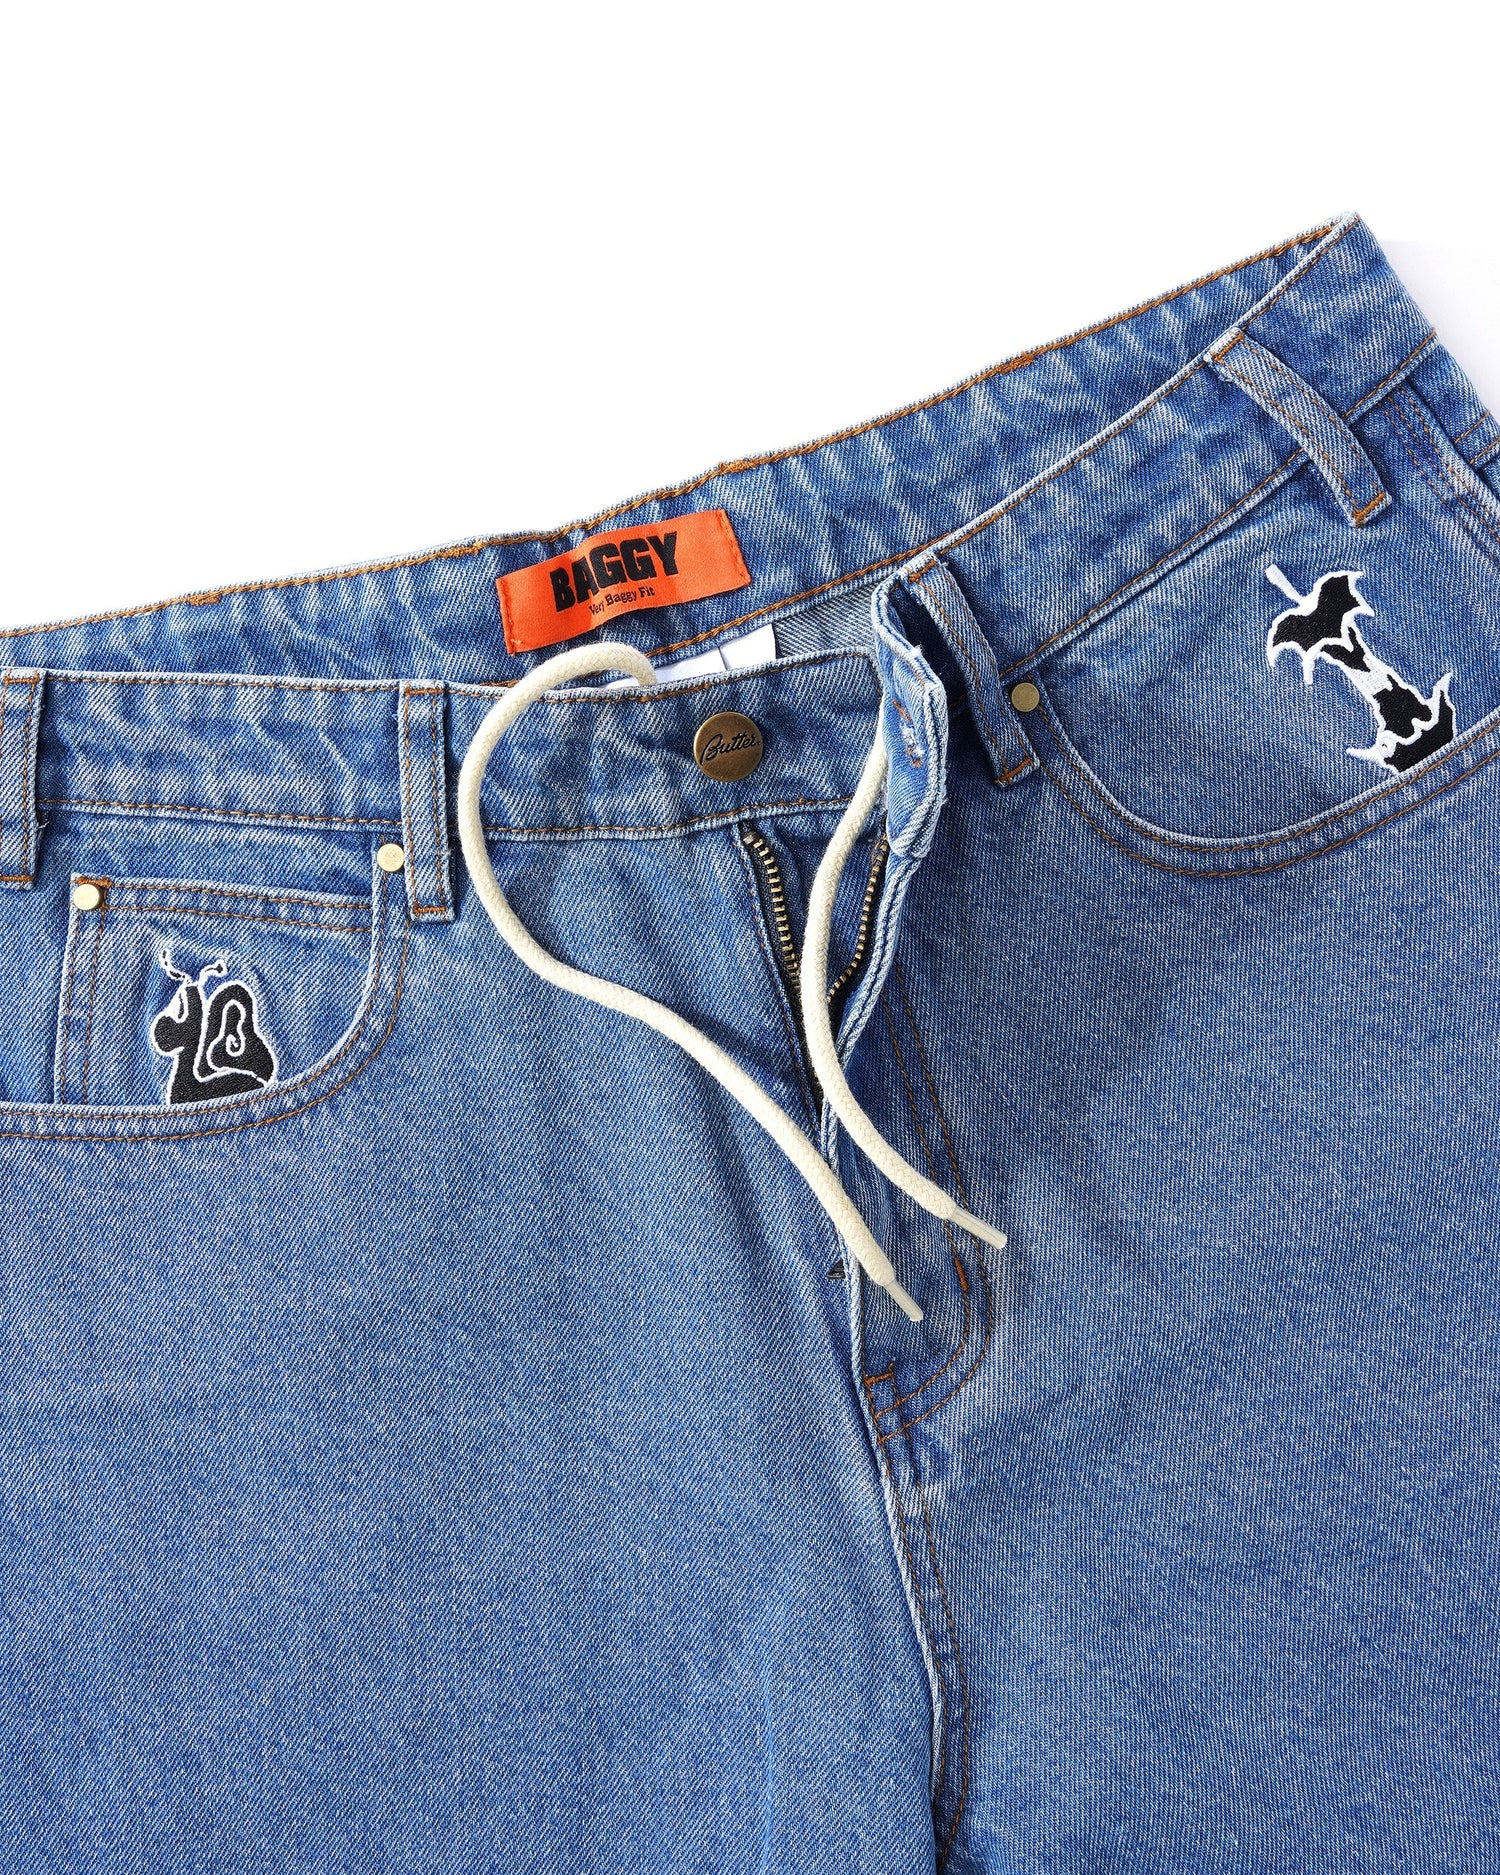 Critter Denim Jeans, Washed Indigo